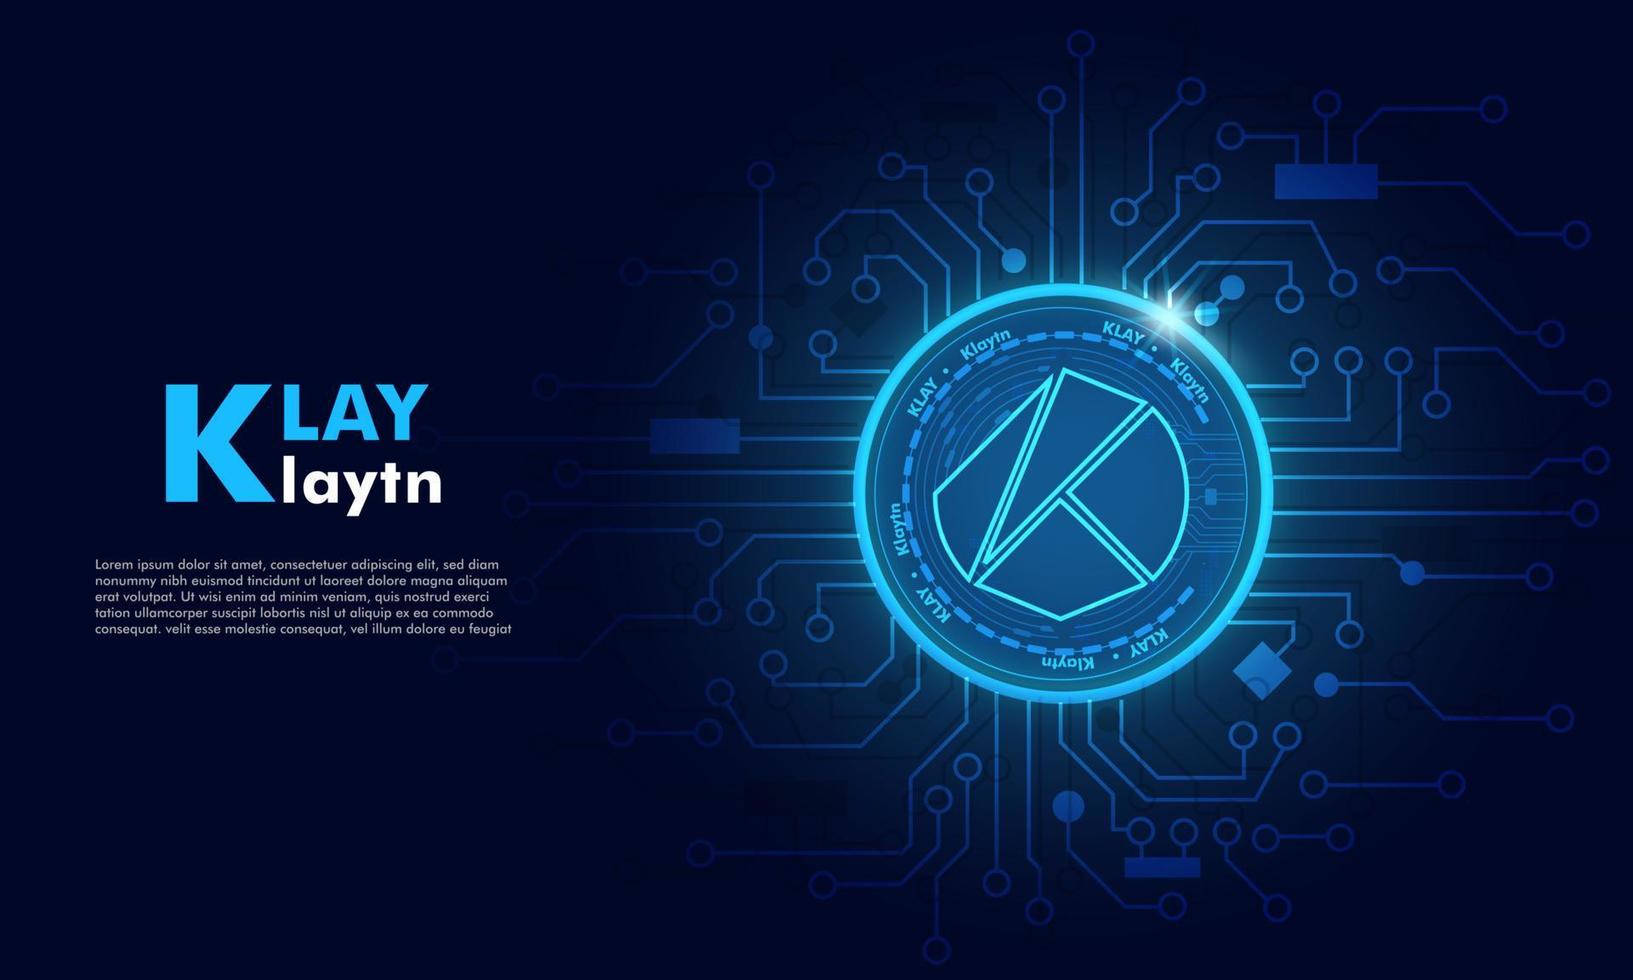 klaytn klay .technology achtergrond met circuit.klay logo donker blue.crypto valuta concept. vector